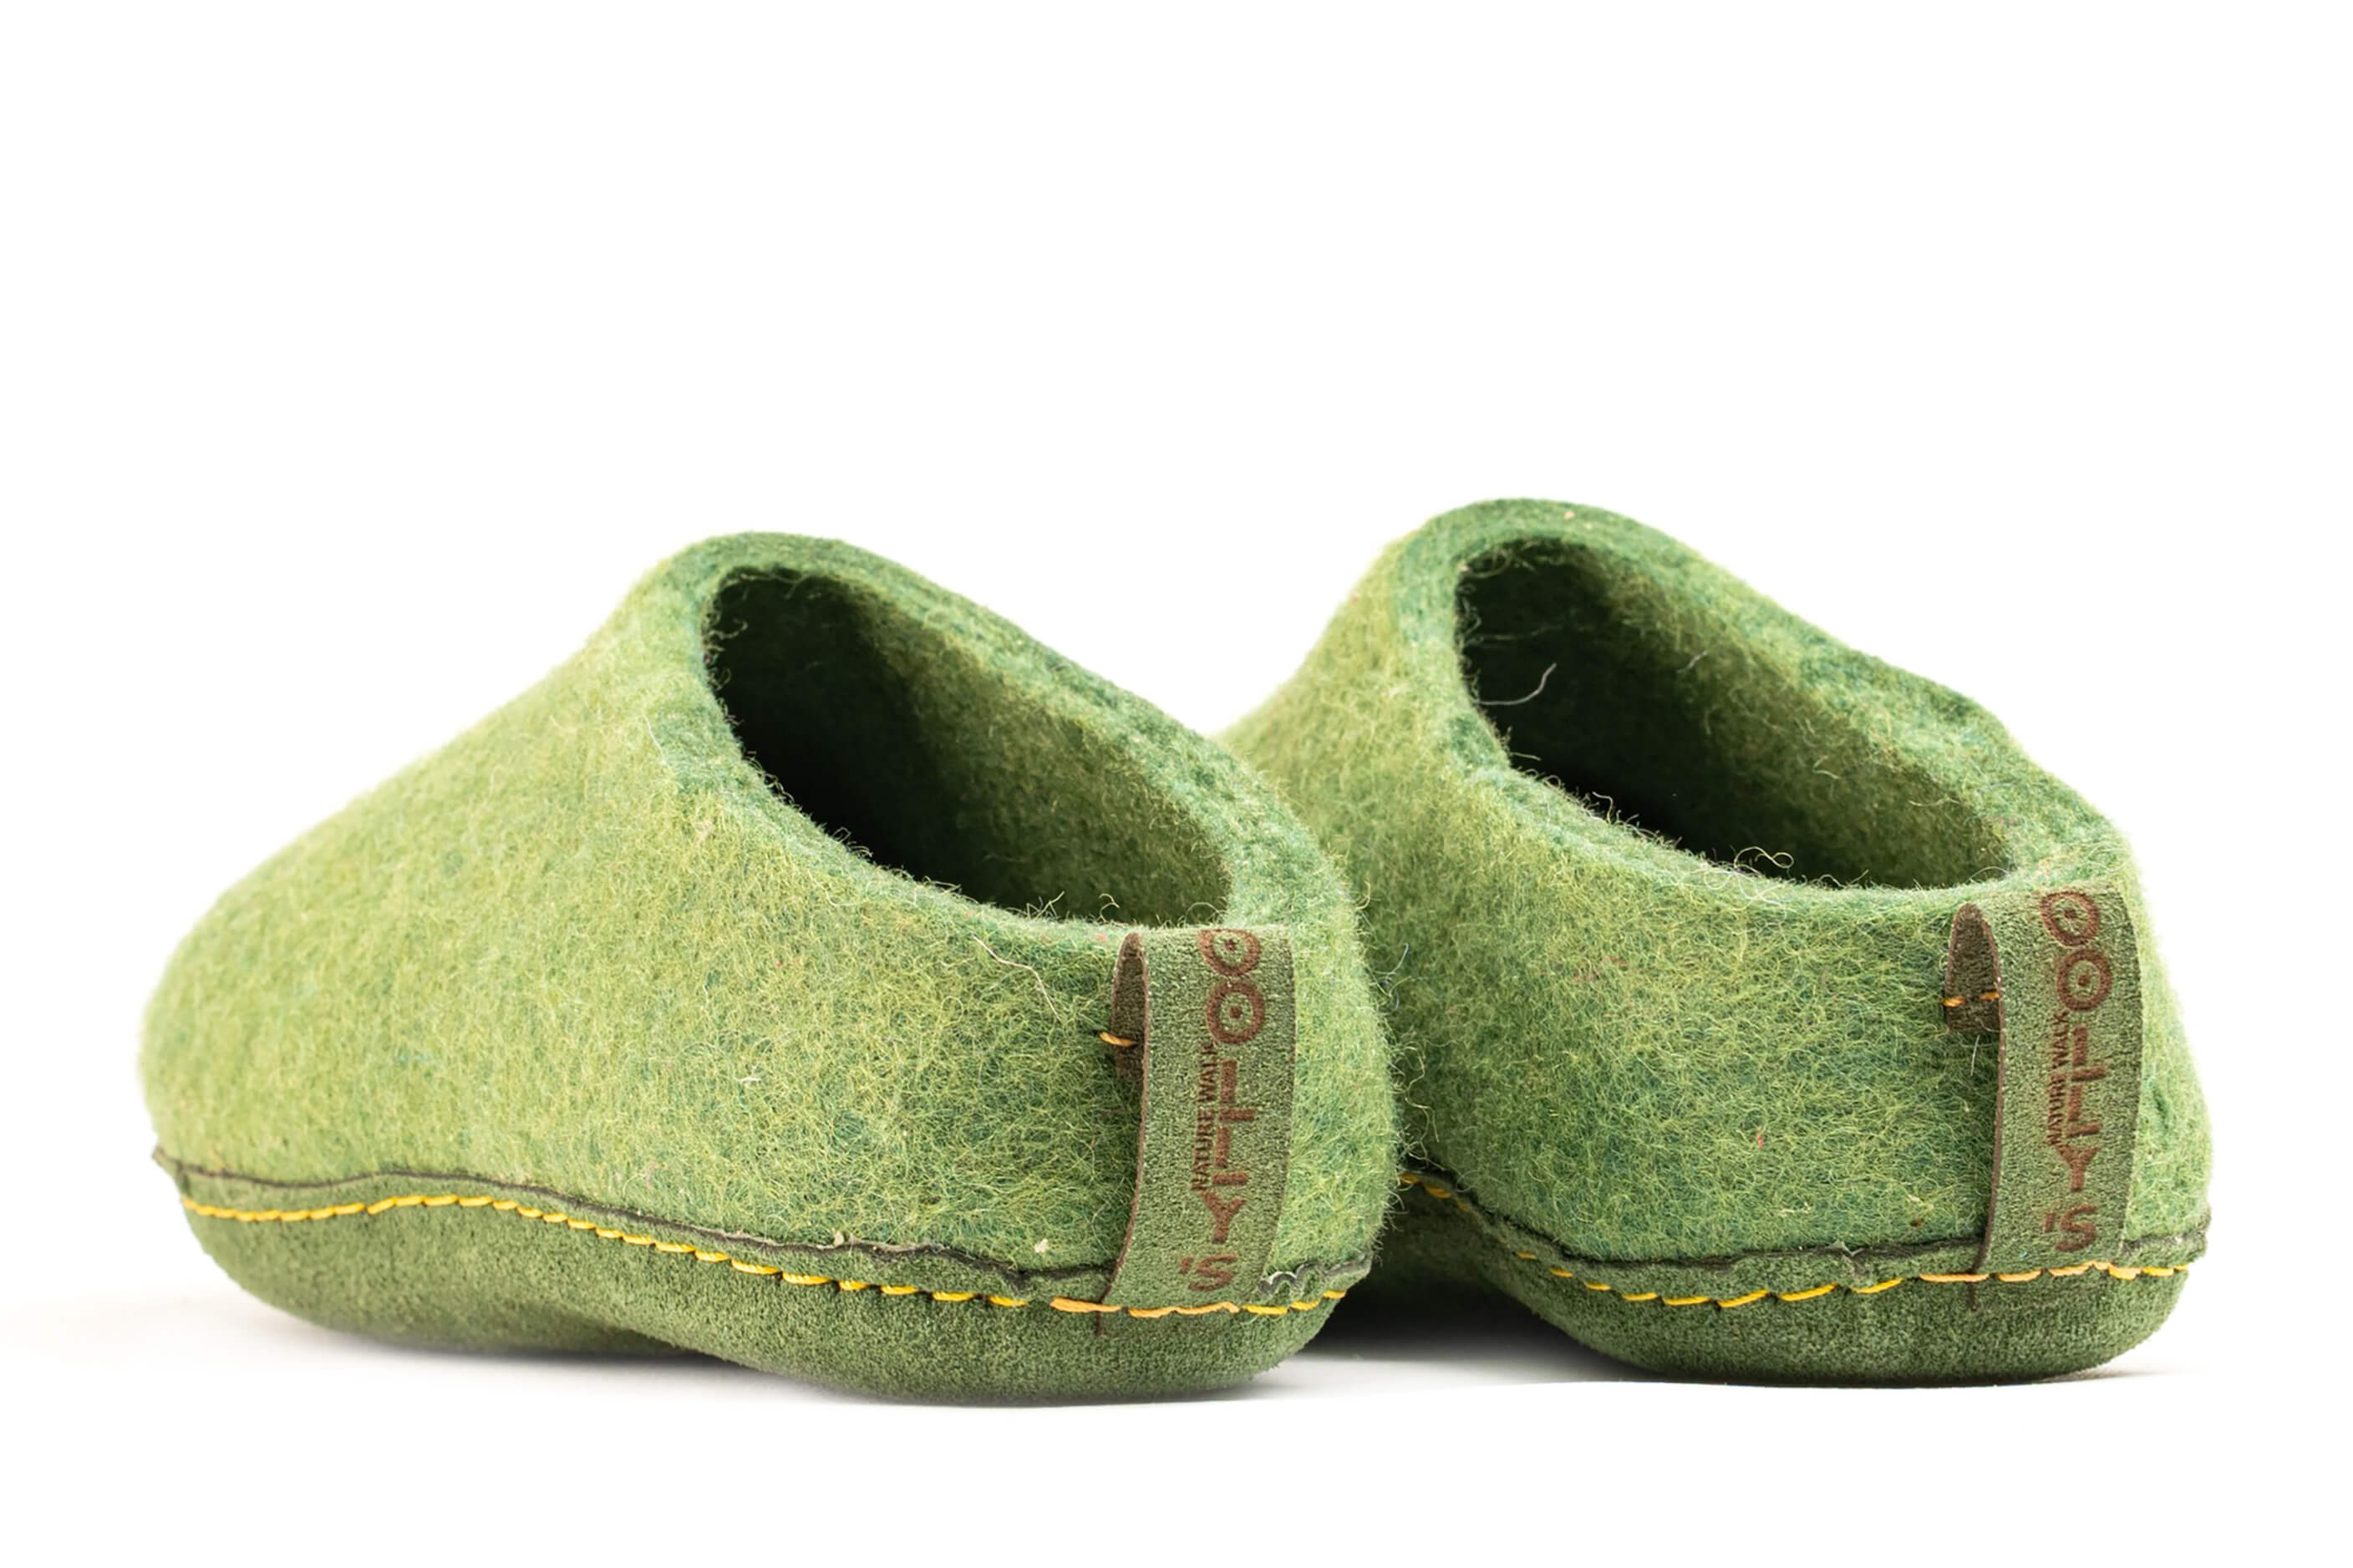 Indoor Open Heel Slippers With Leather Sole - Green